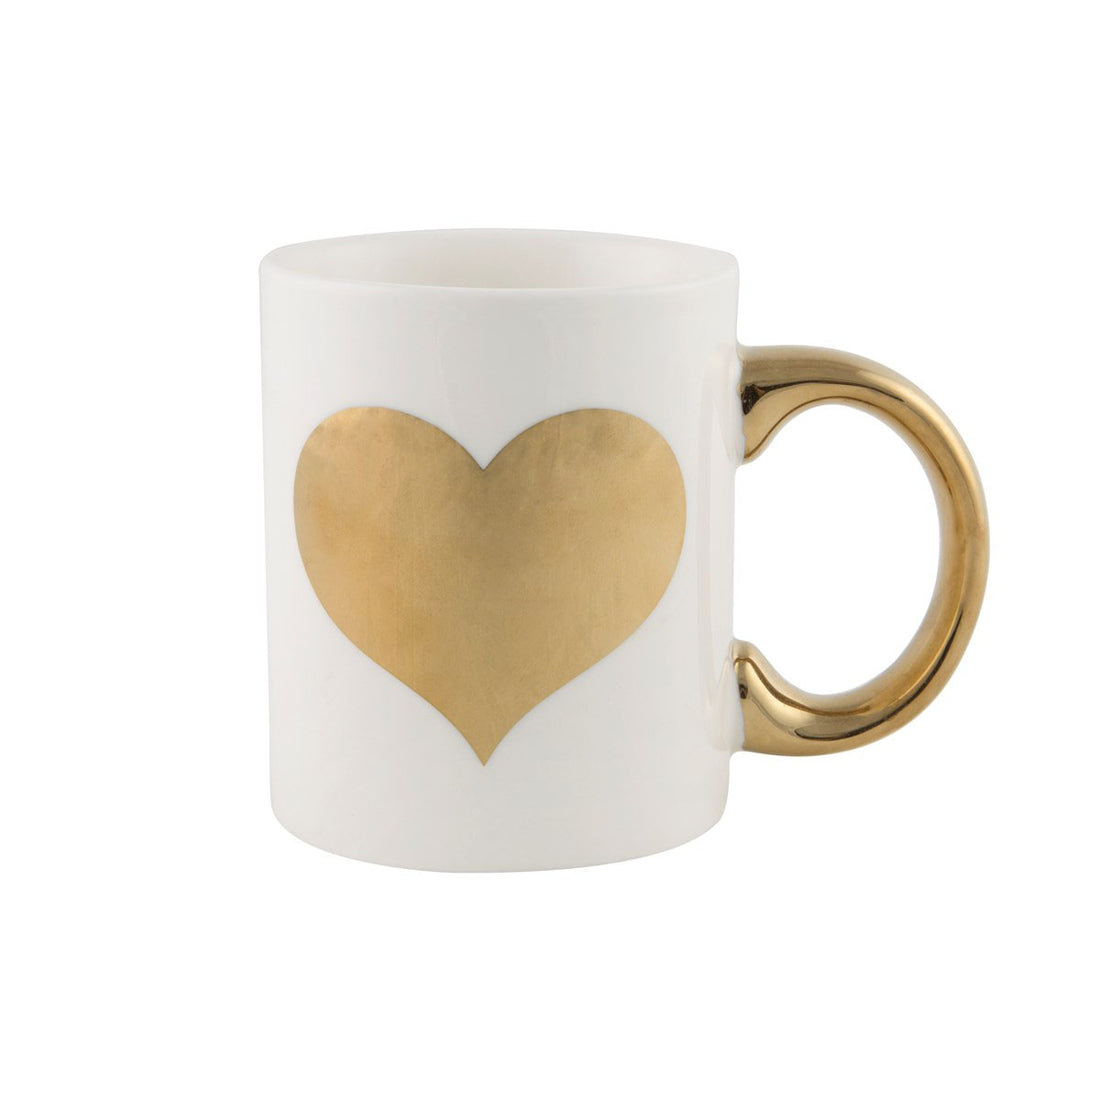 rjb-stone-matallic-monochrome-gold-heart-mug-01